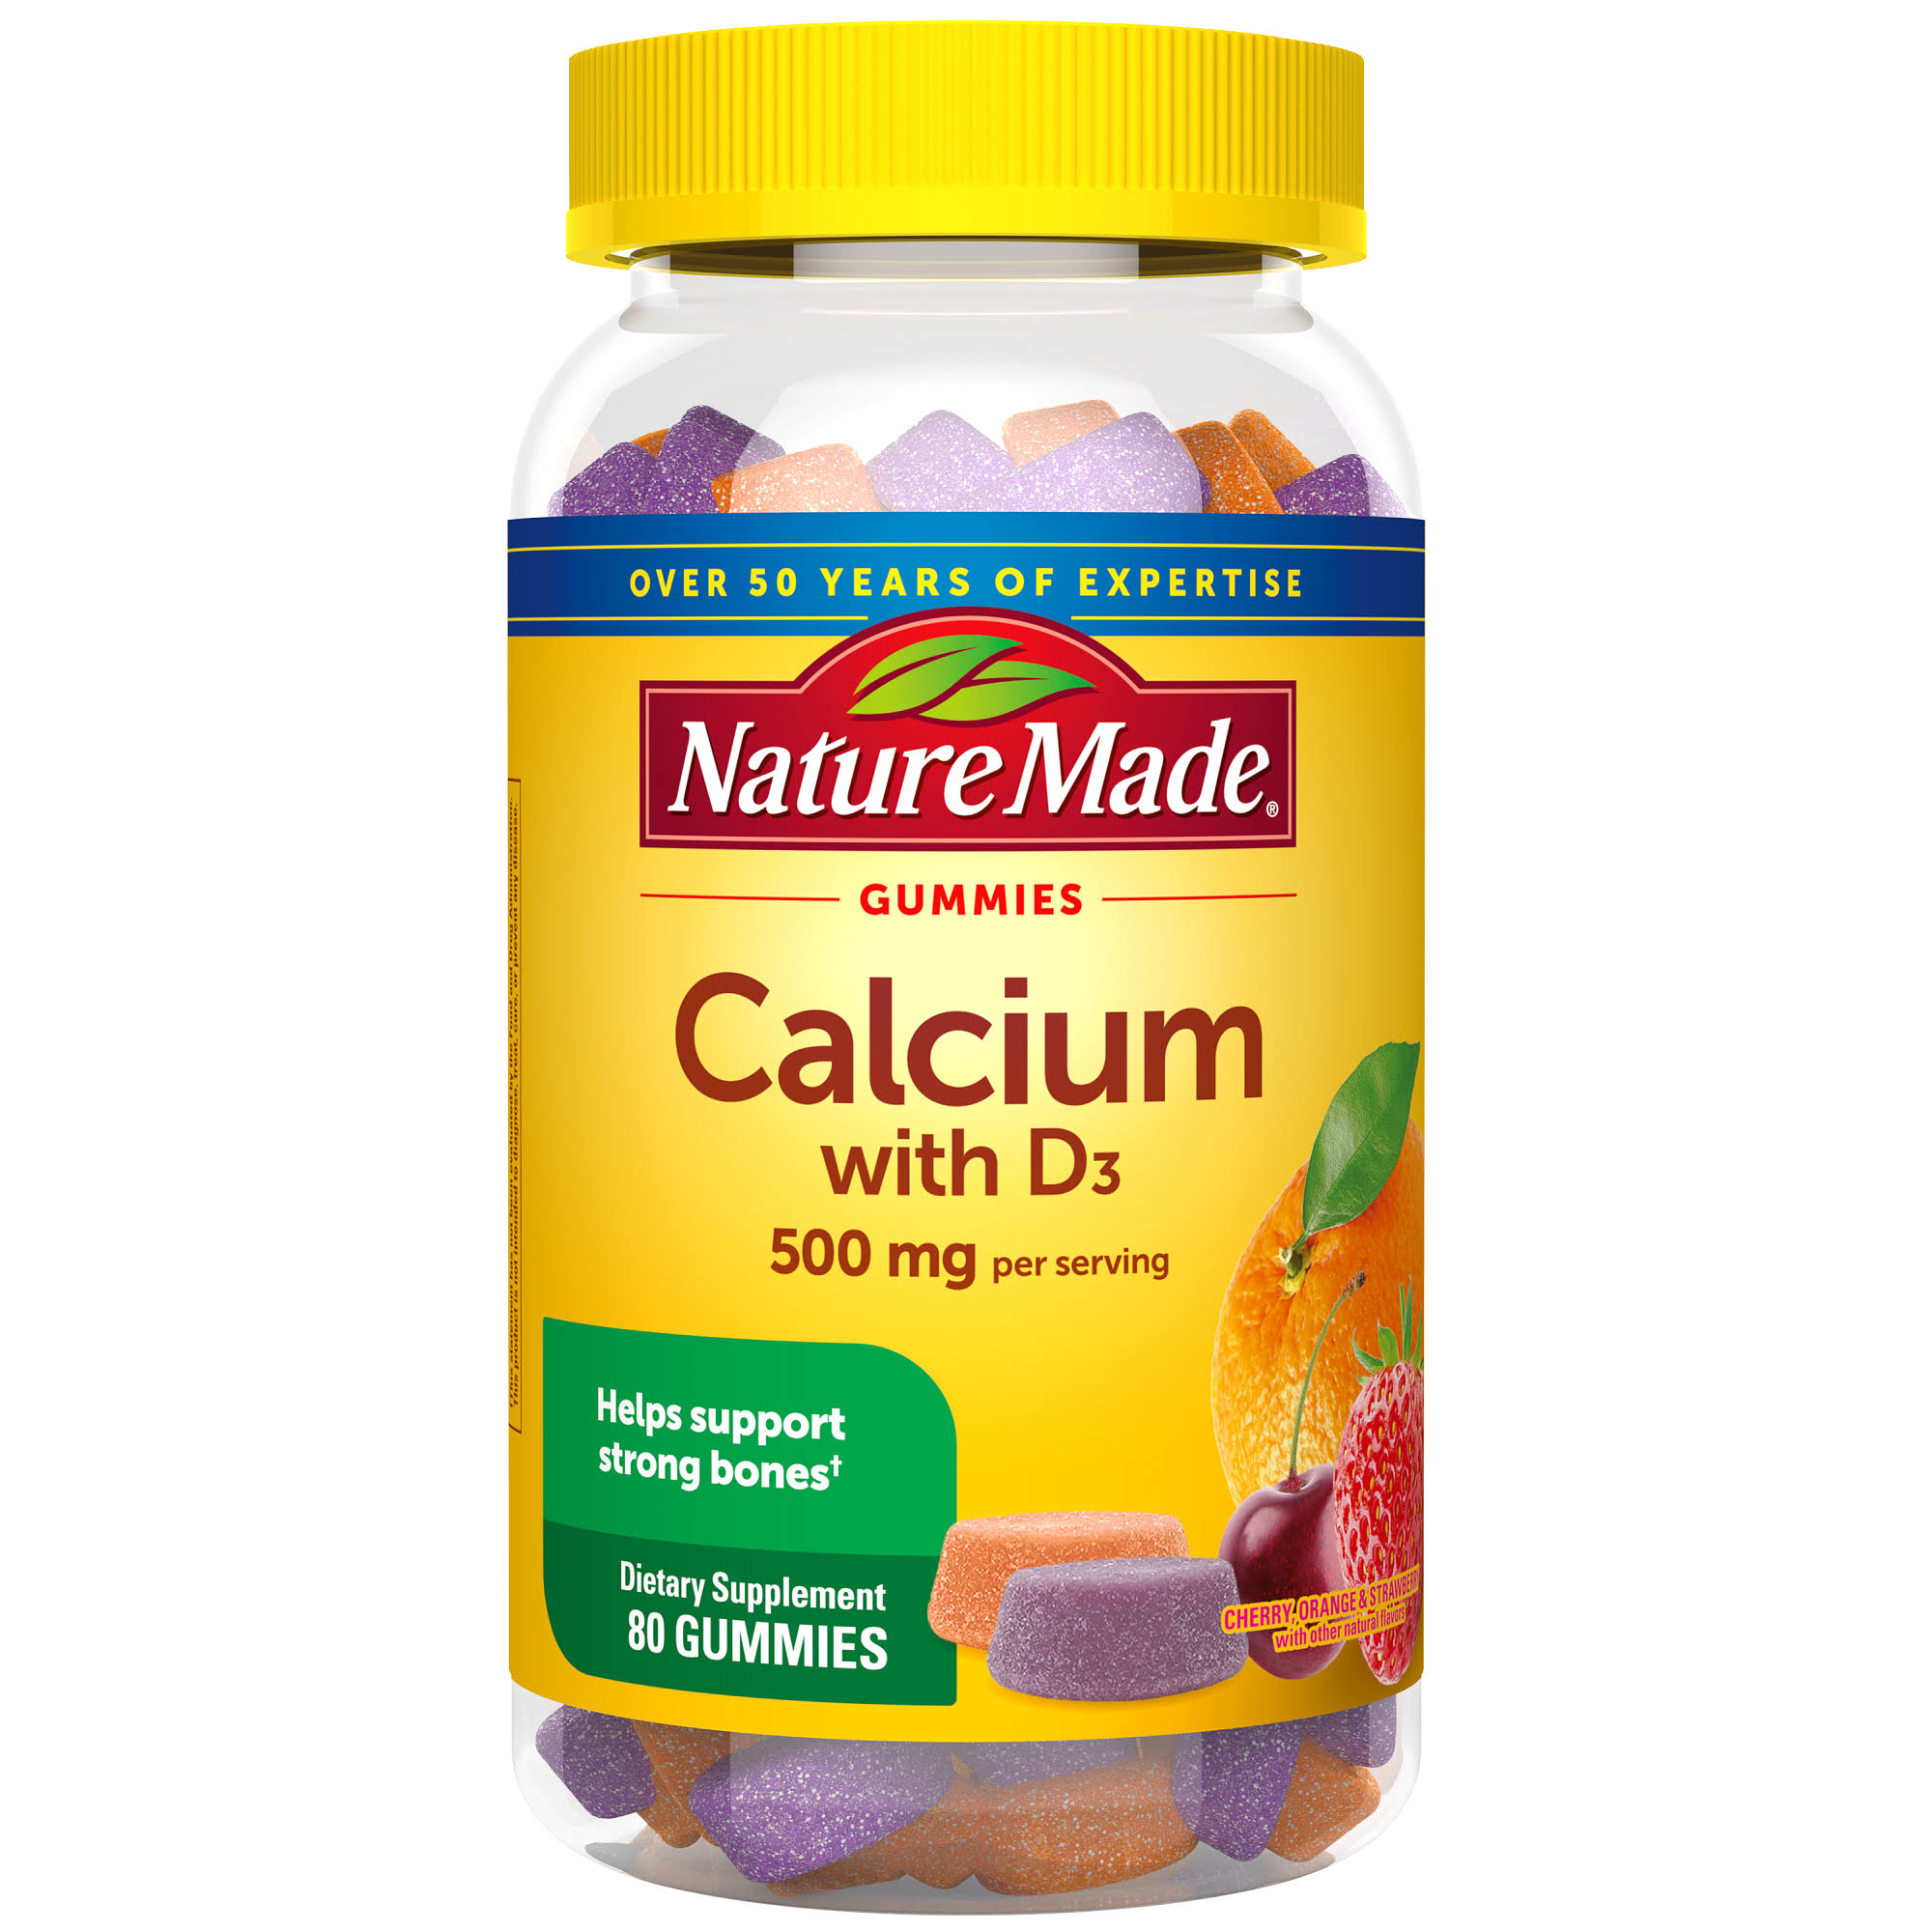 Nature Made Calcium Adult Gummies Dietary Supplement - 80ct